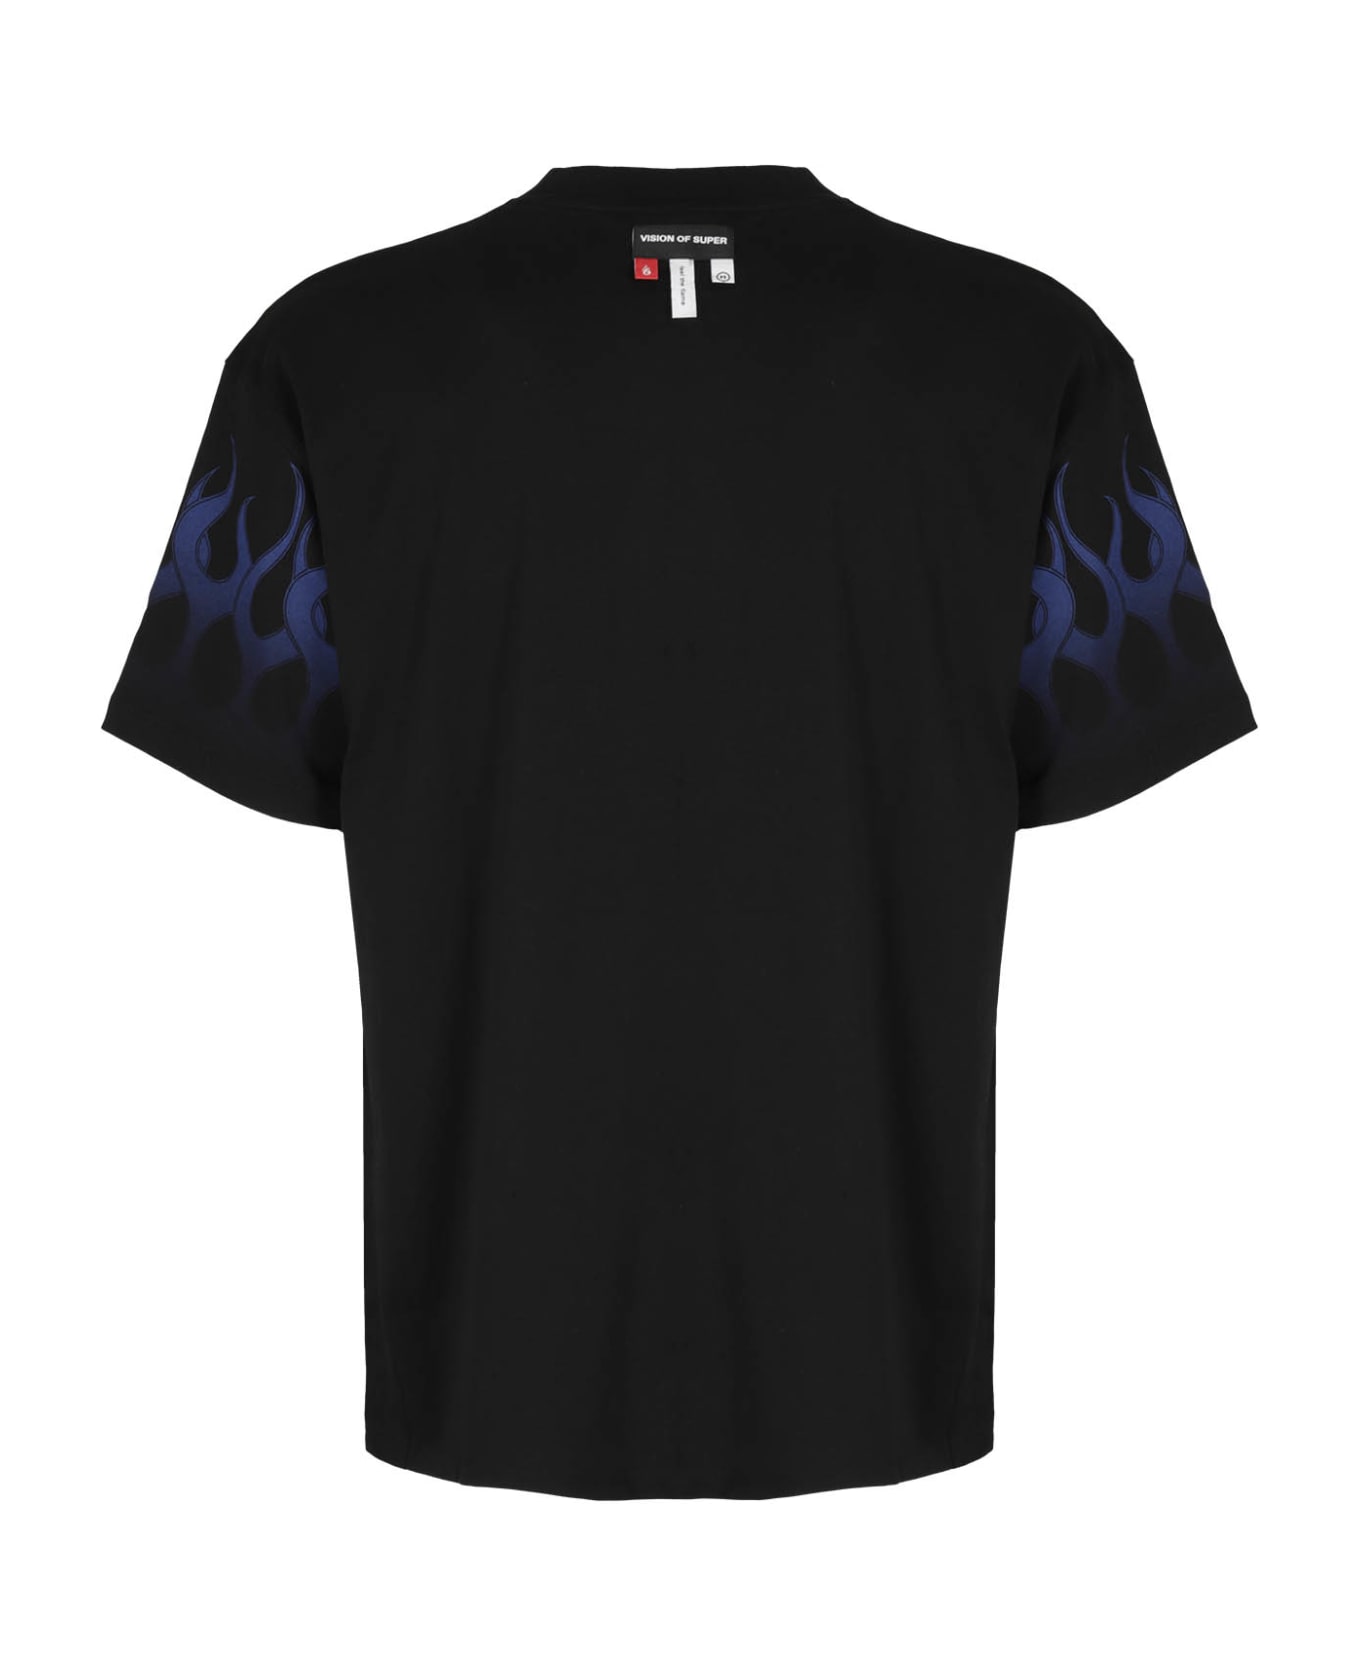 Vision of Super Black Tshirt With Blue Flames - Black Blue